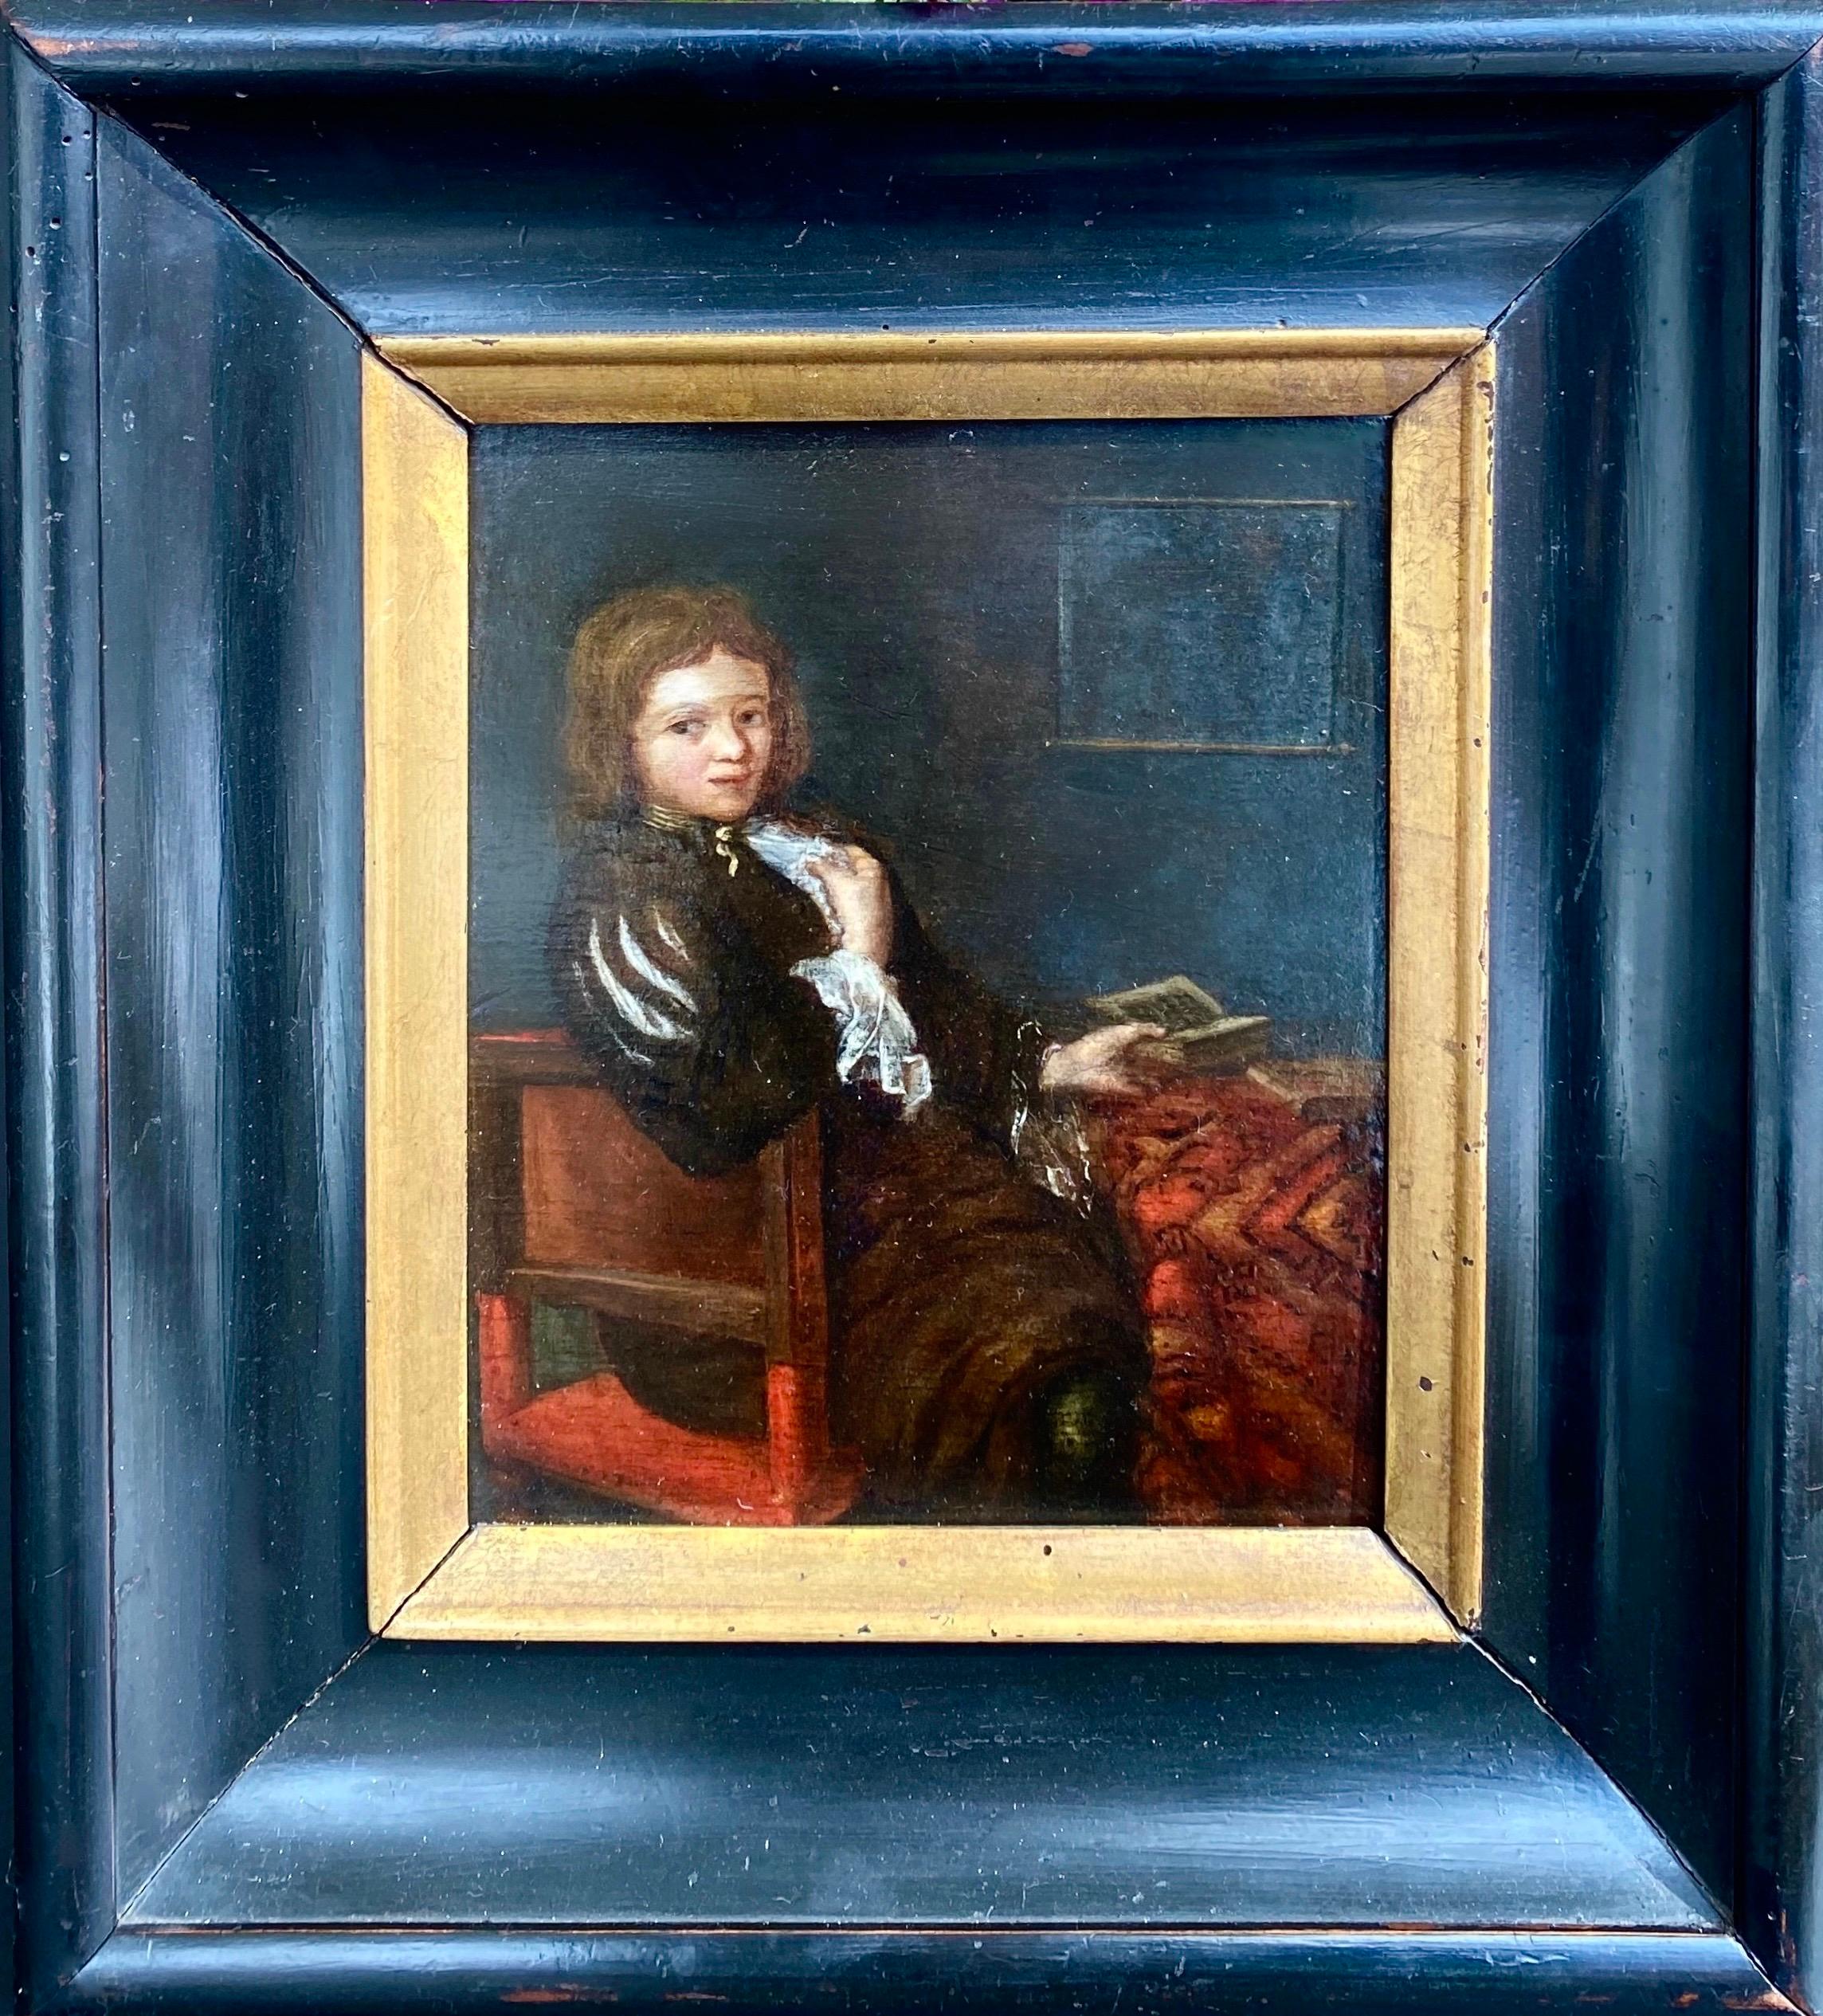 Petite Dutch 17th century portrait of a gentleman - interior genre figurative - Painting by Unknown